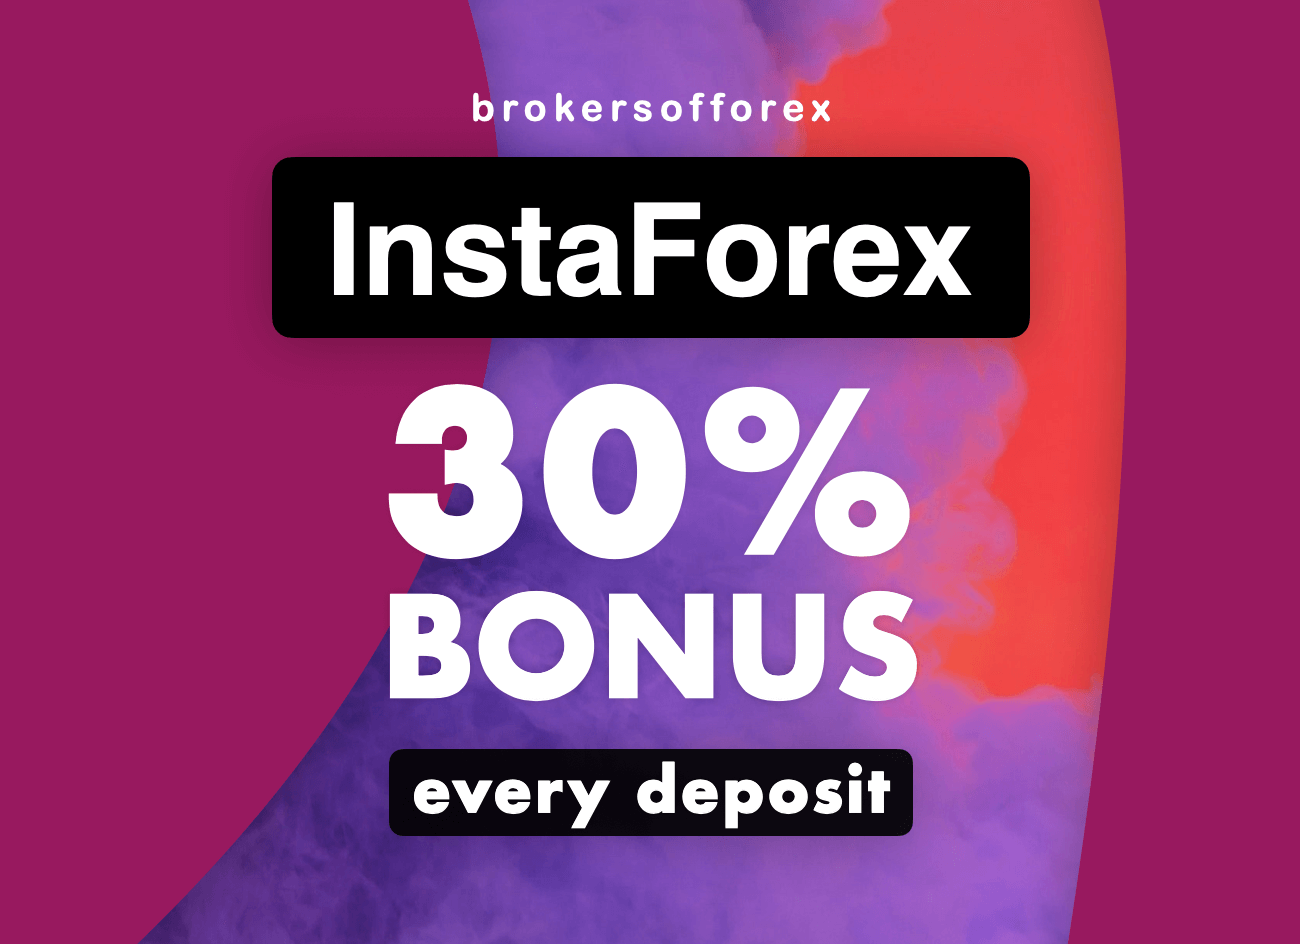 InstaForex 30% Bonus On Every Deposit